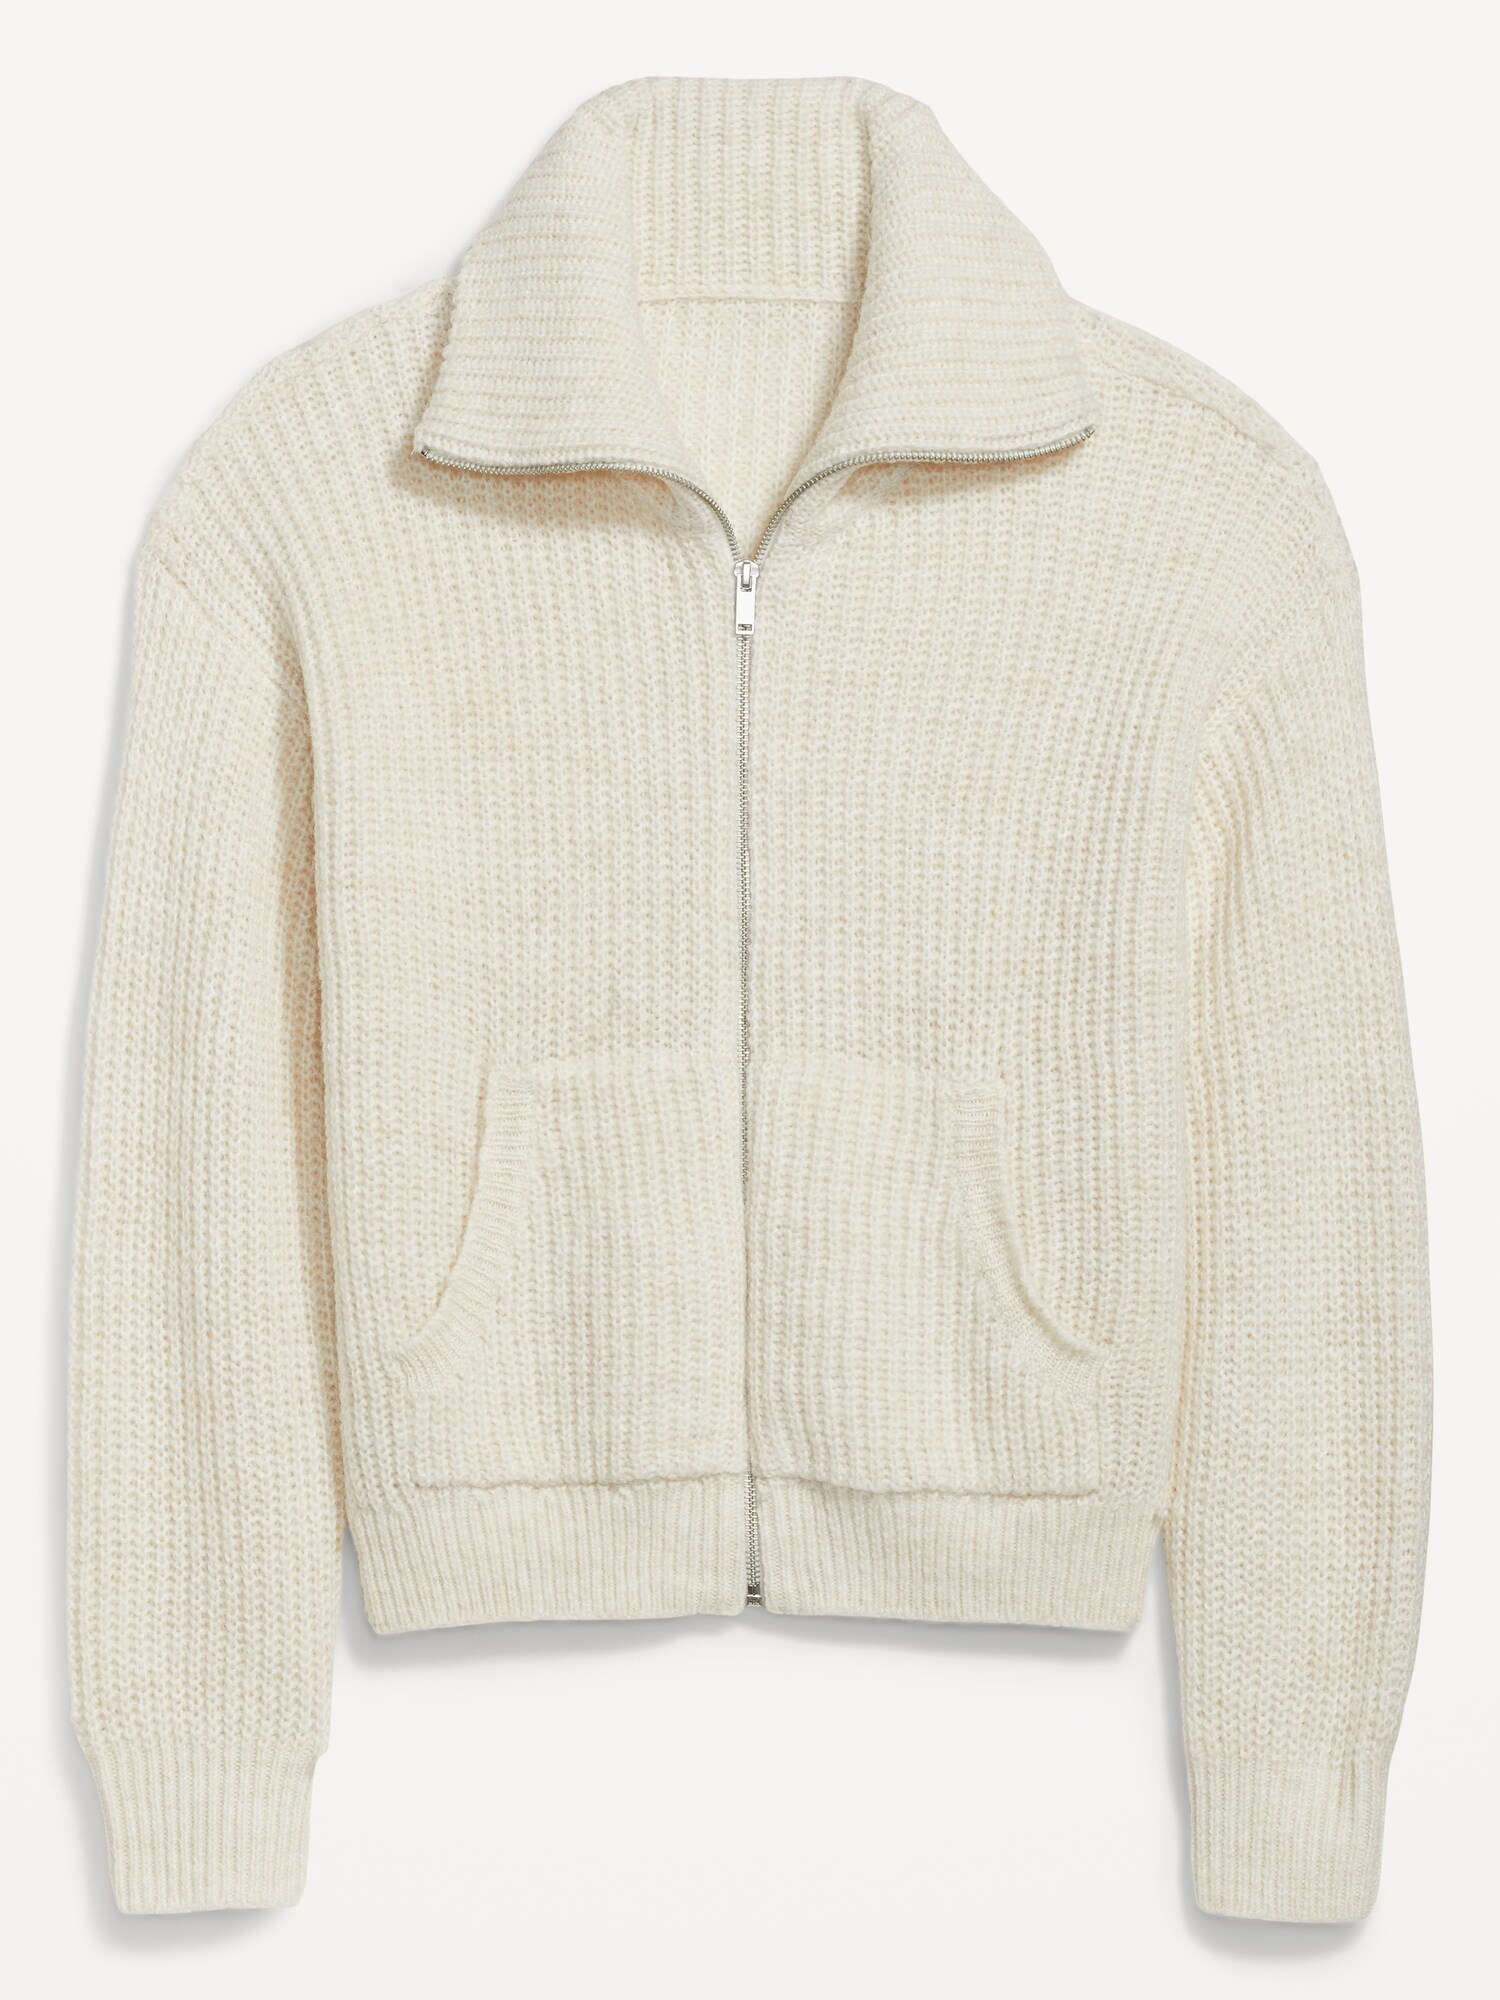 Full-Zip Cardigan Sweater for Women | Old Navy